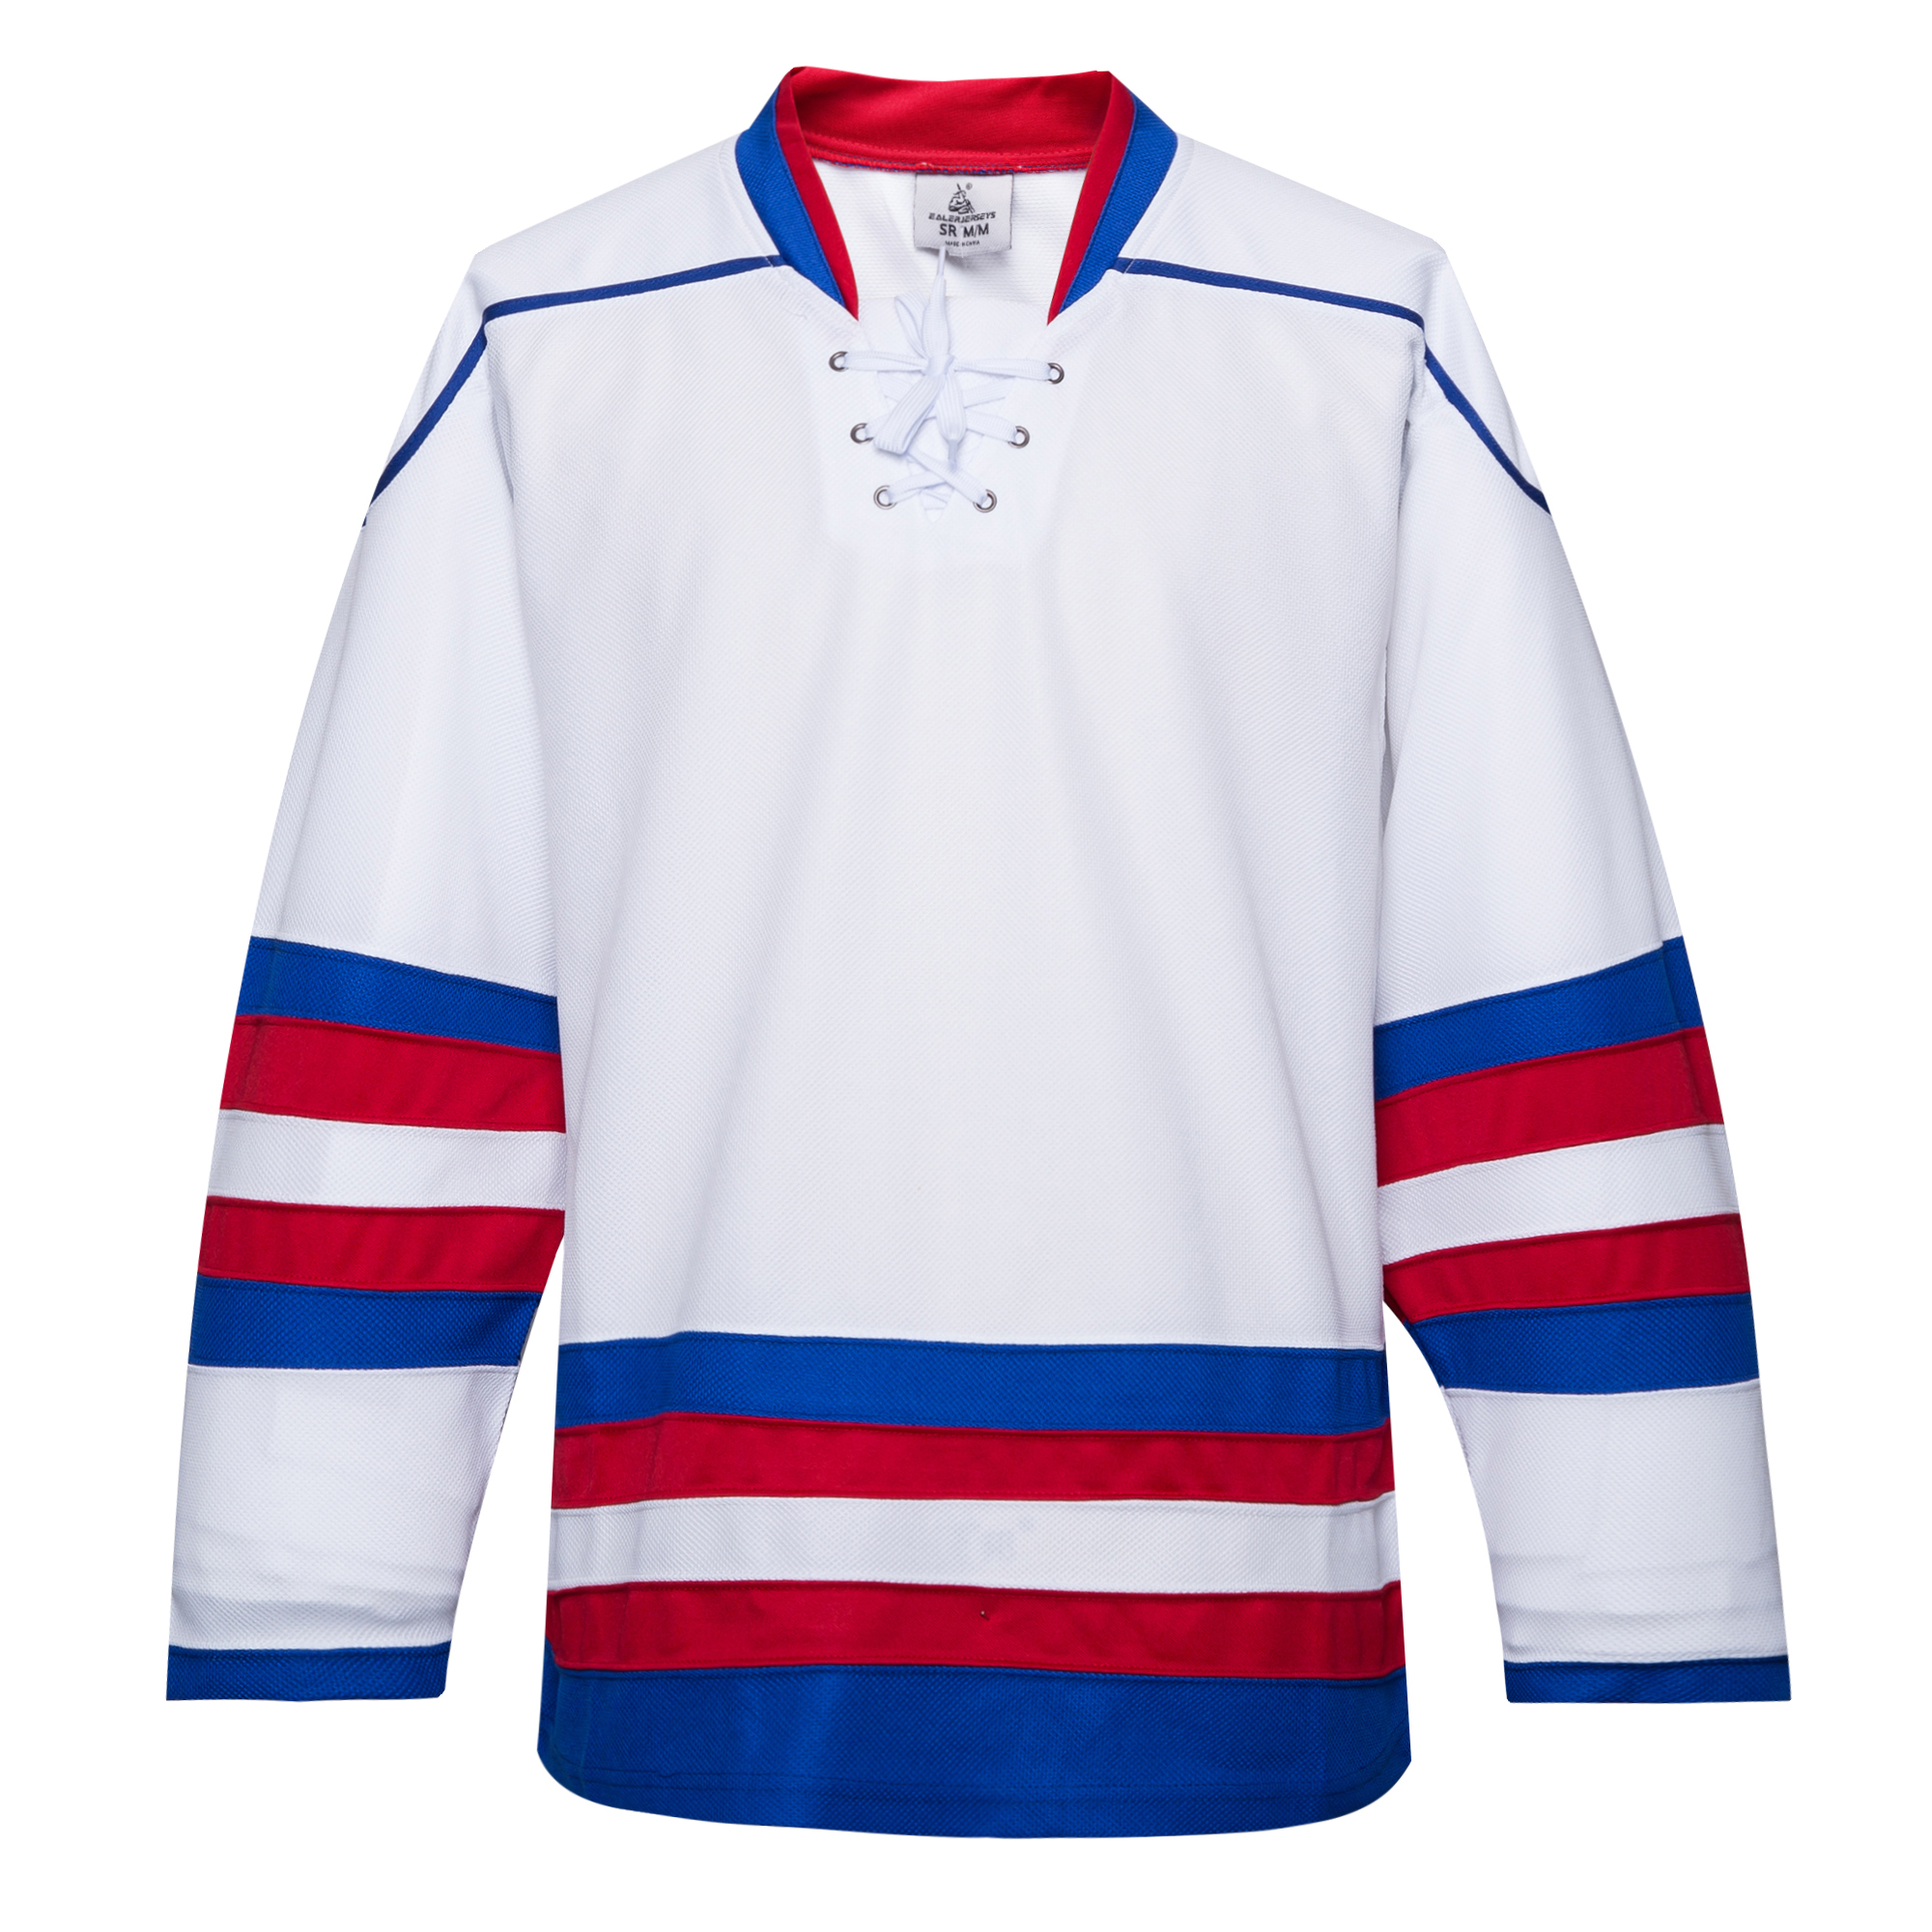 H900-E035 White Blank hockey Practice Jerseys